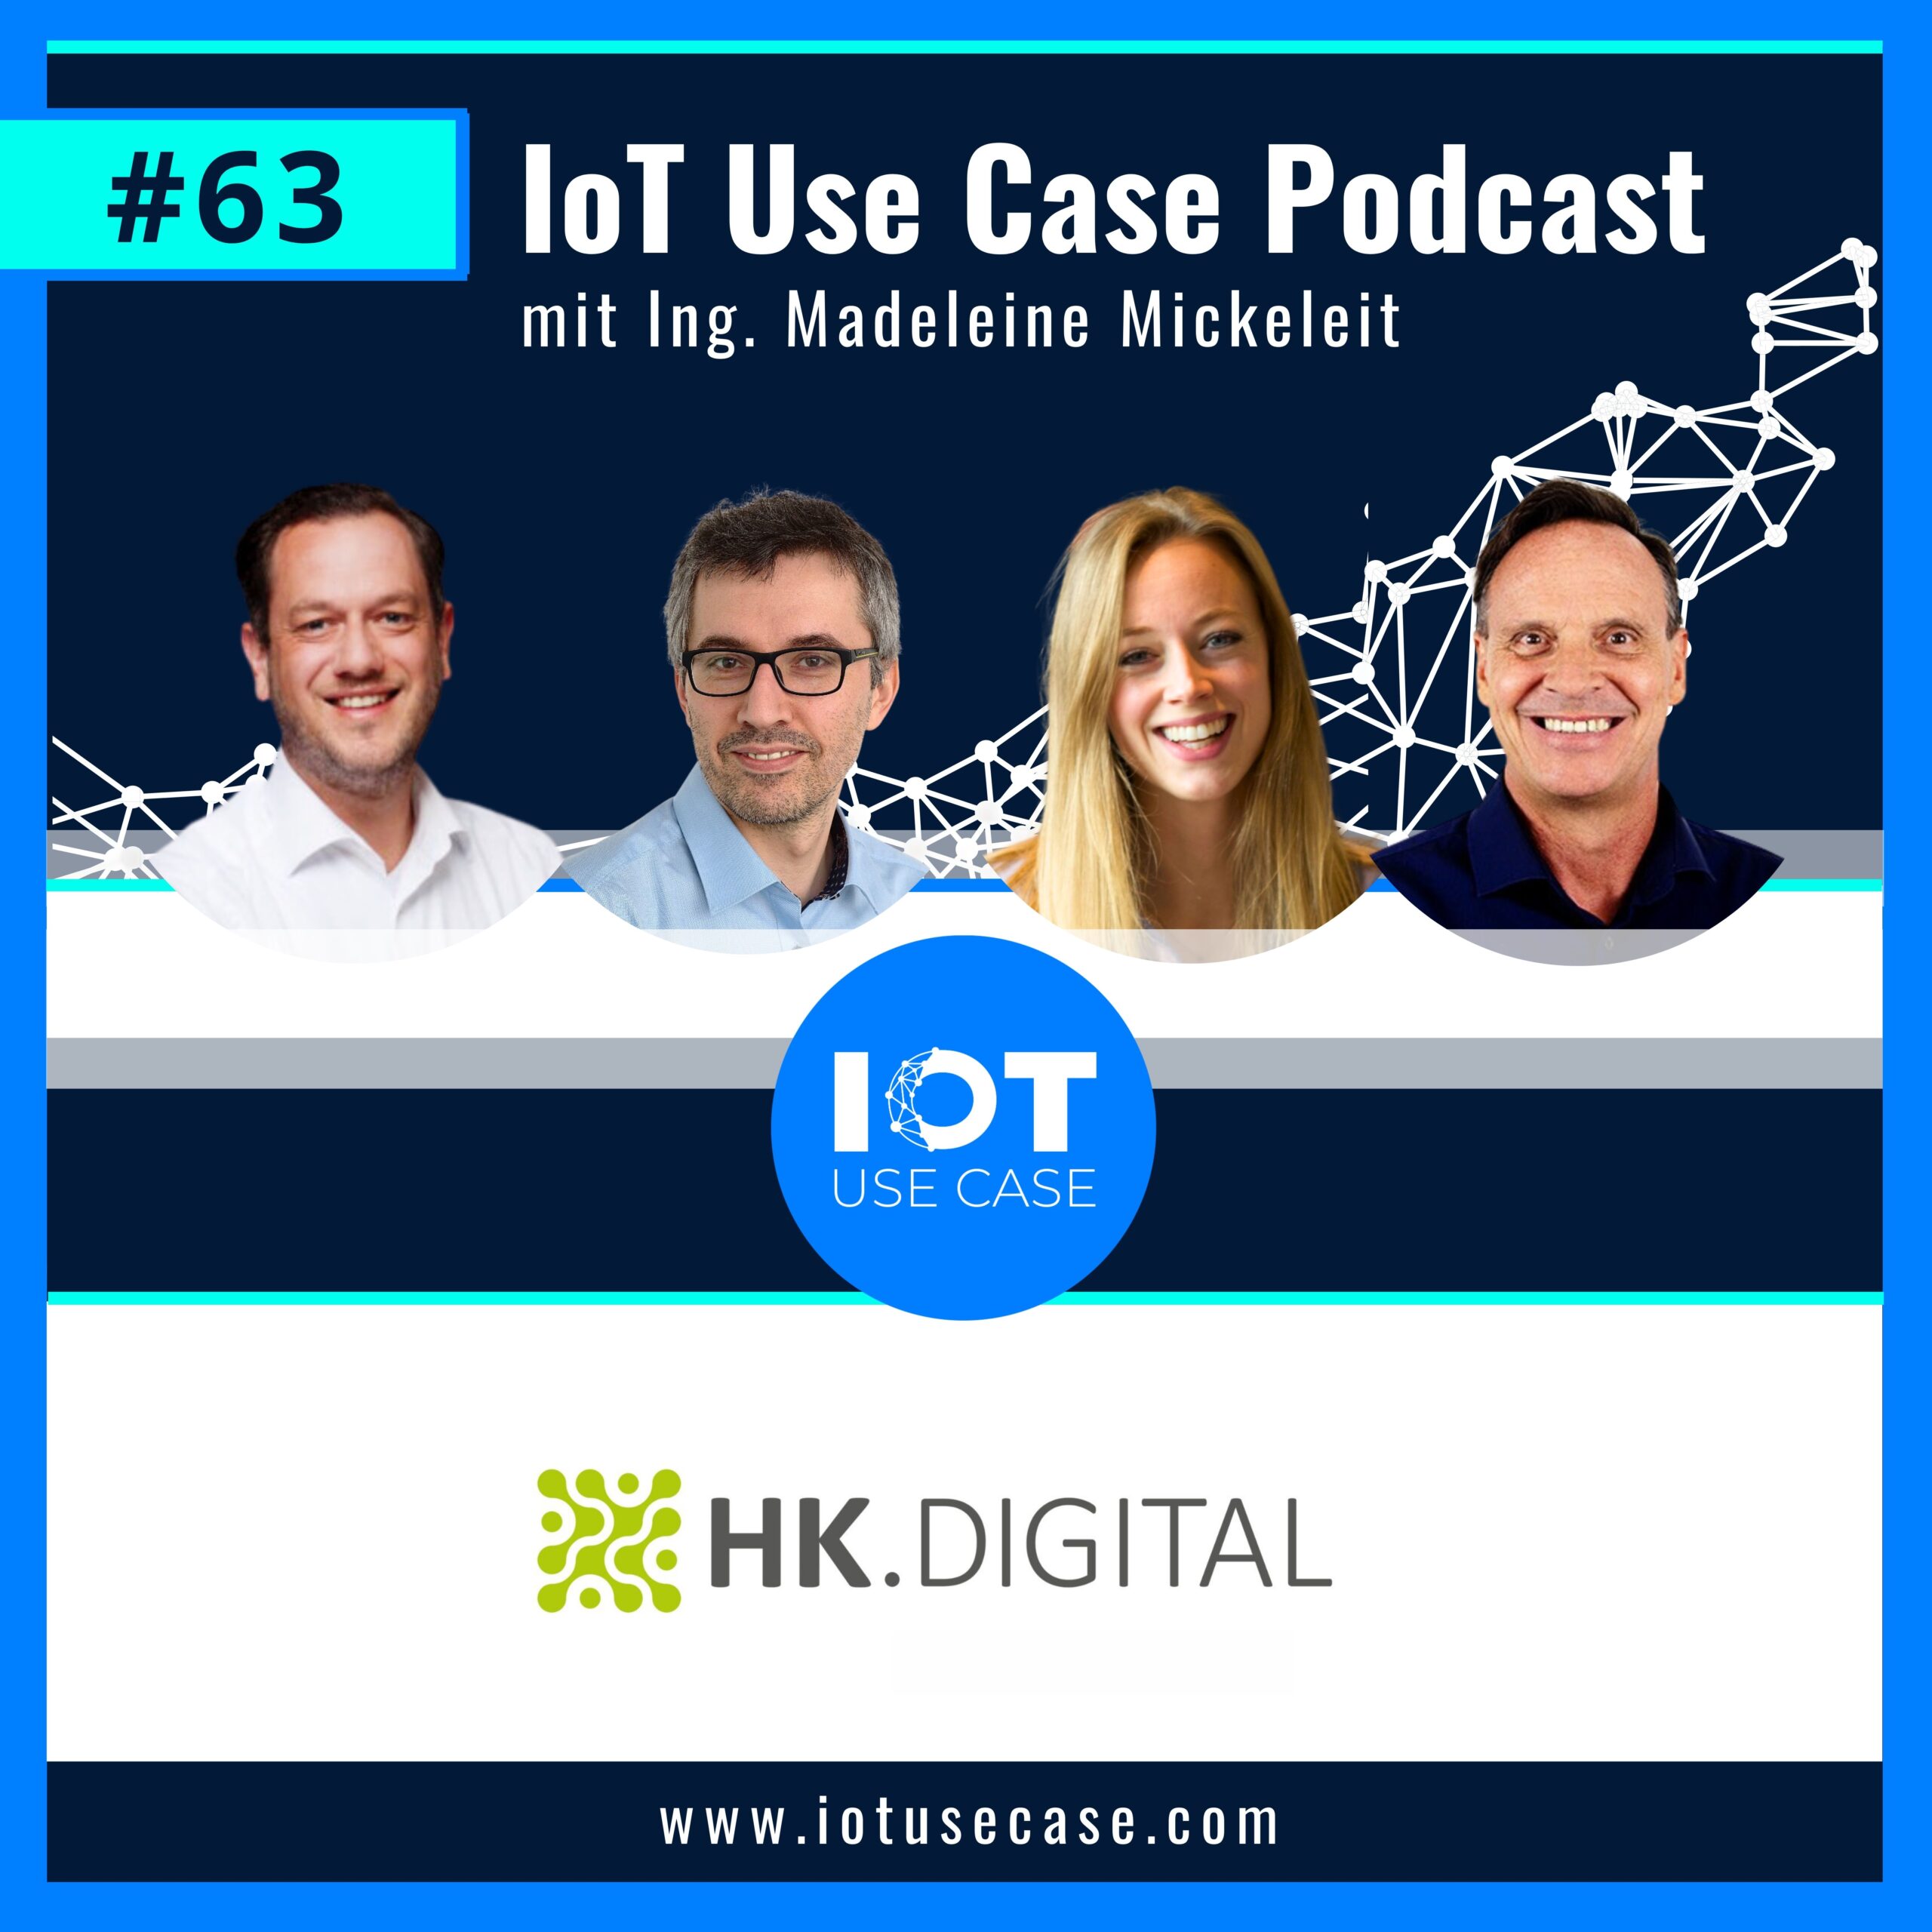 IoT Use Case Podcast #63 - HK.DIGITAL